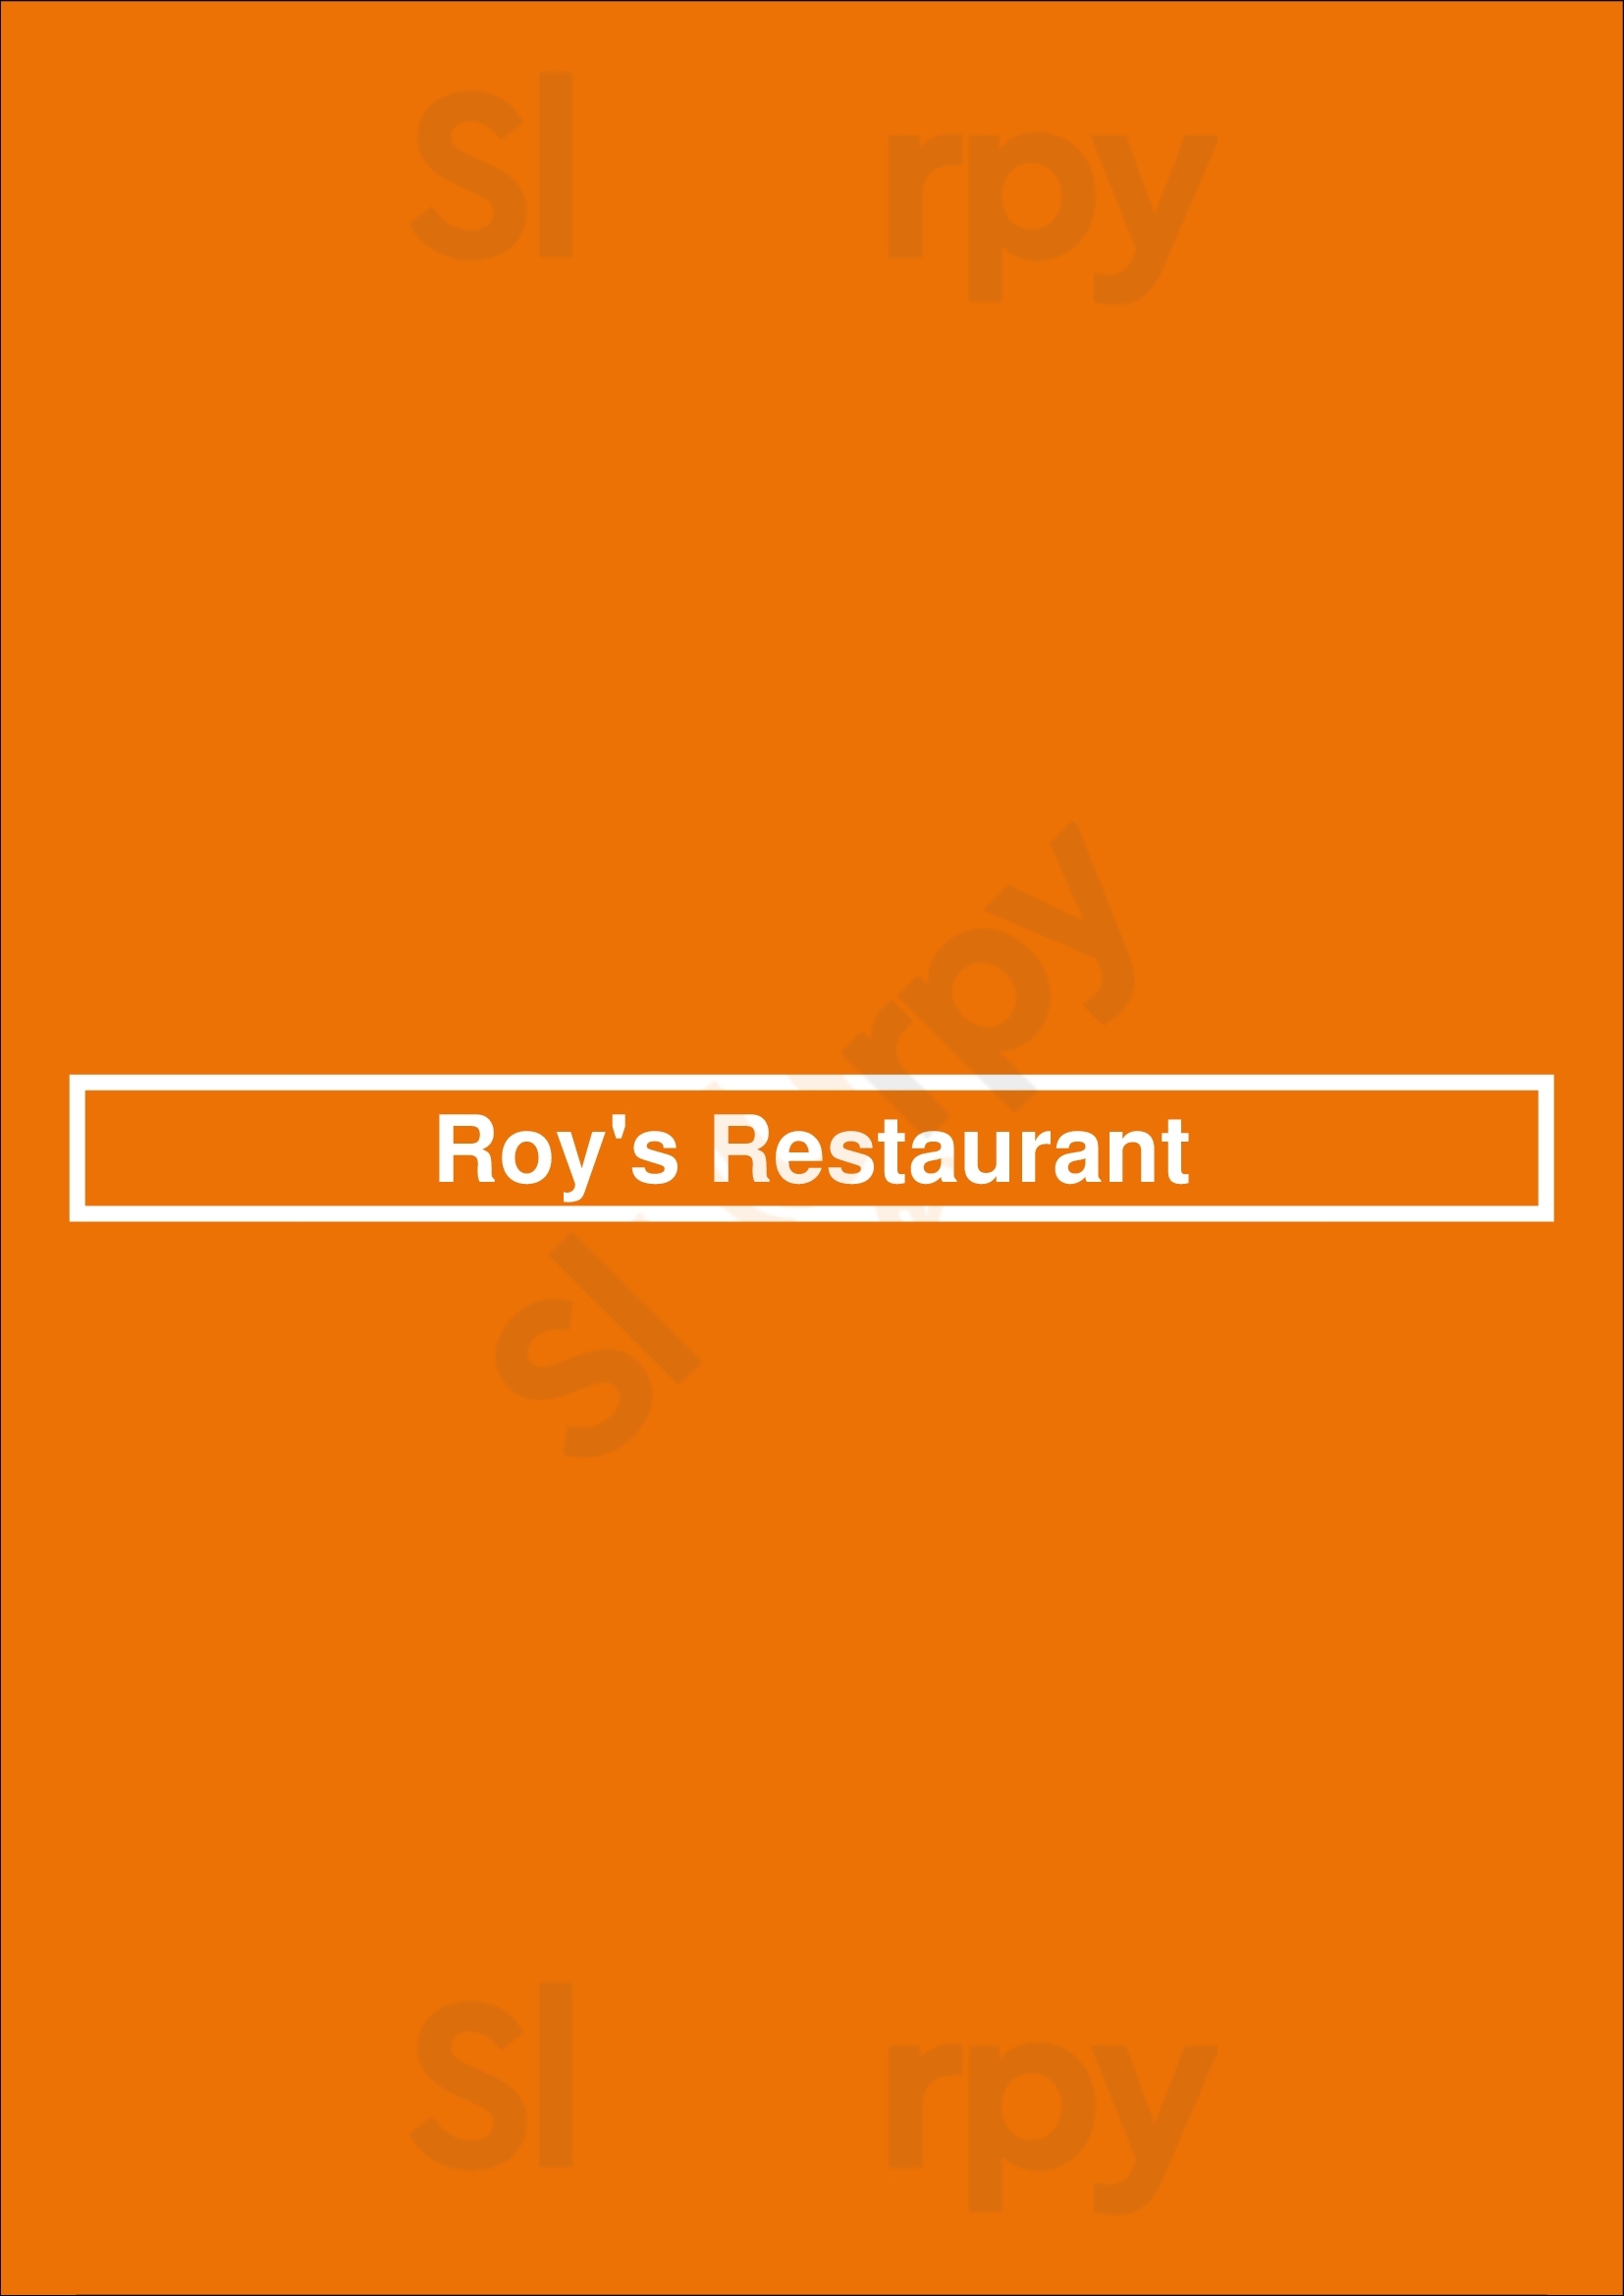 Roy's Restaurant Rancho Mirage Menu - 1